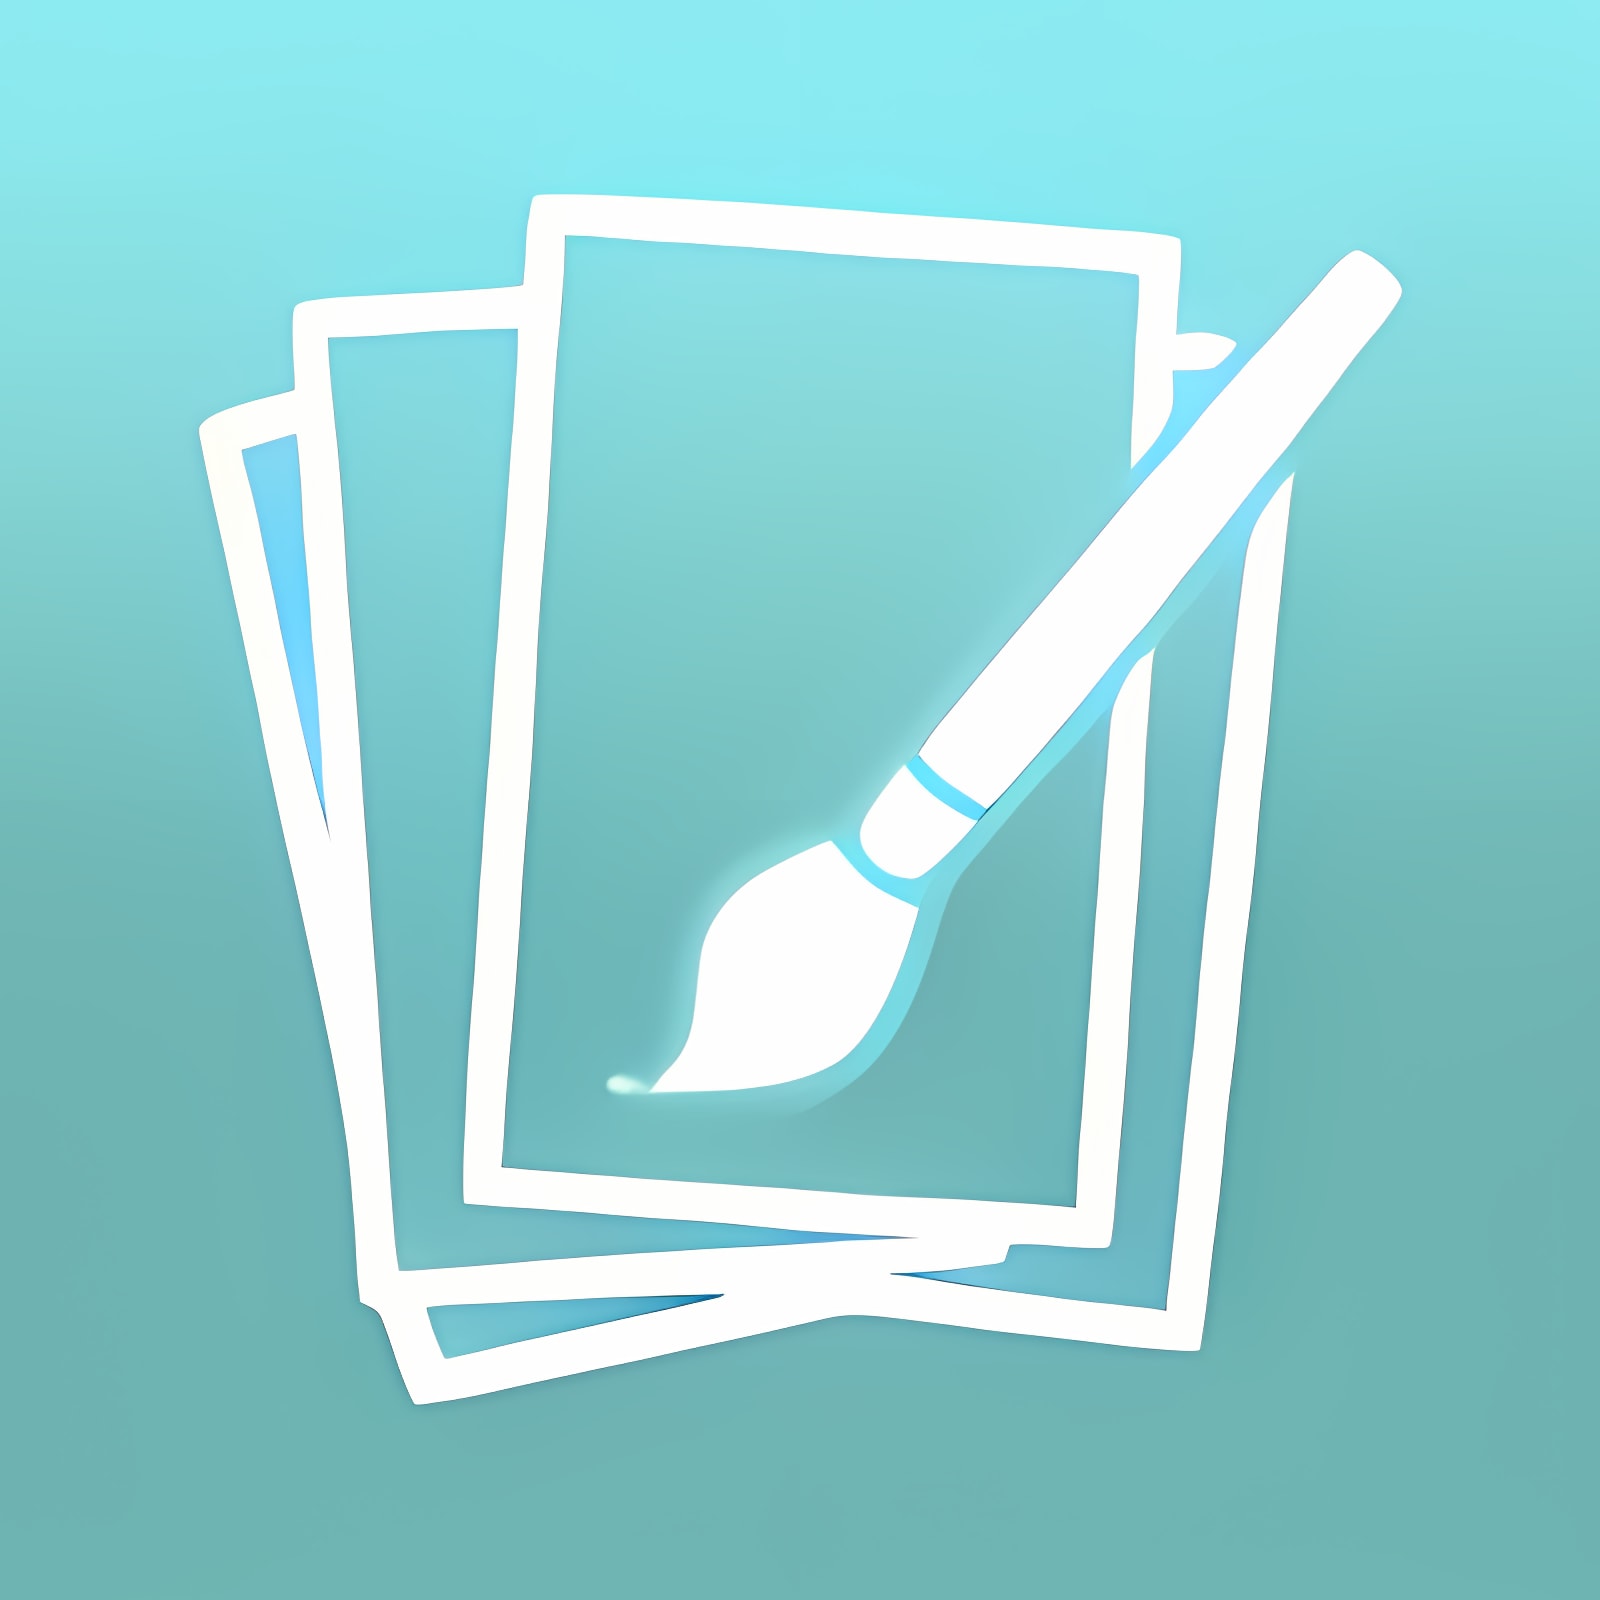 Download wallpaperGen: Create beautiful wallpapers Install Latest App downloader